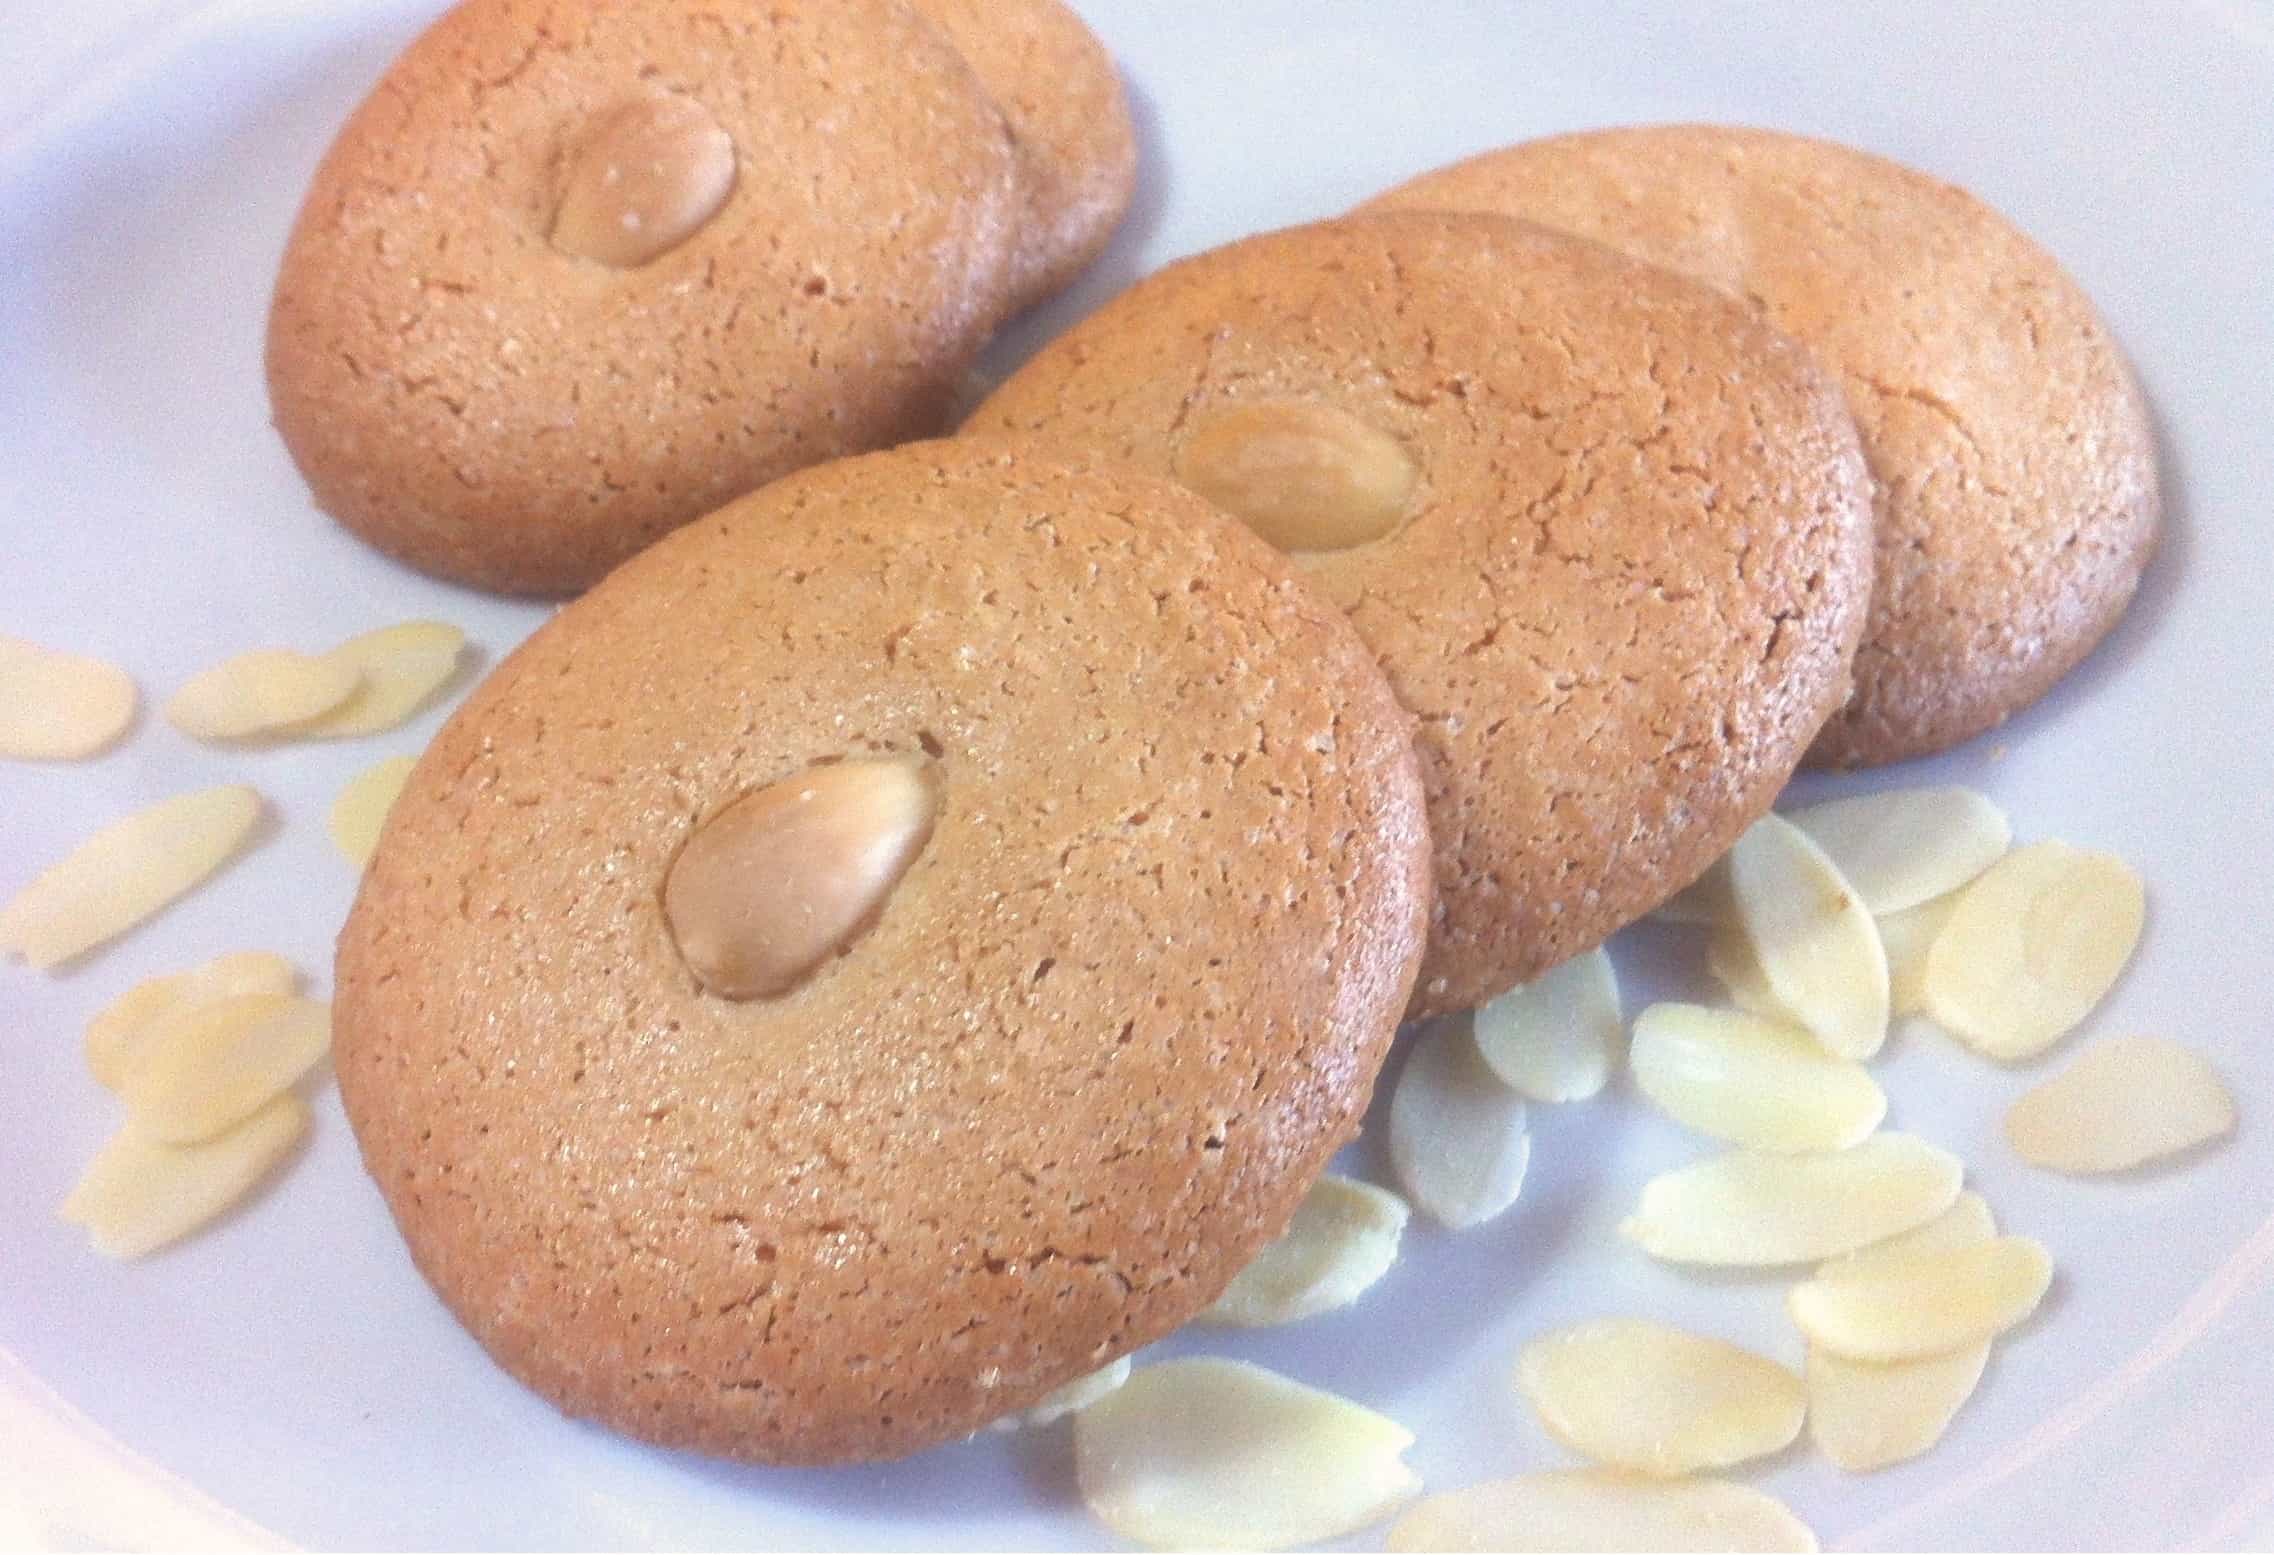 https://www.mygreekdish.com/wp-content/uploads/2013/12/Greek-Almond-Cookies-Ergolavi-53.jpg